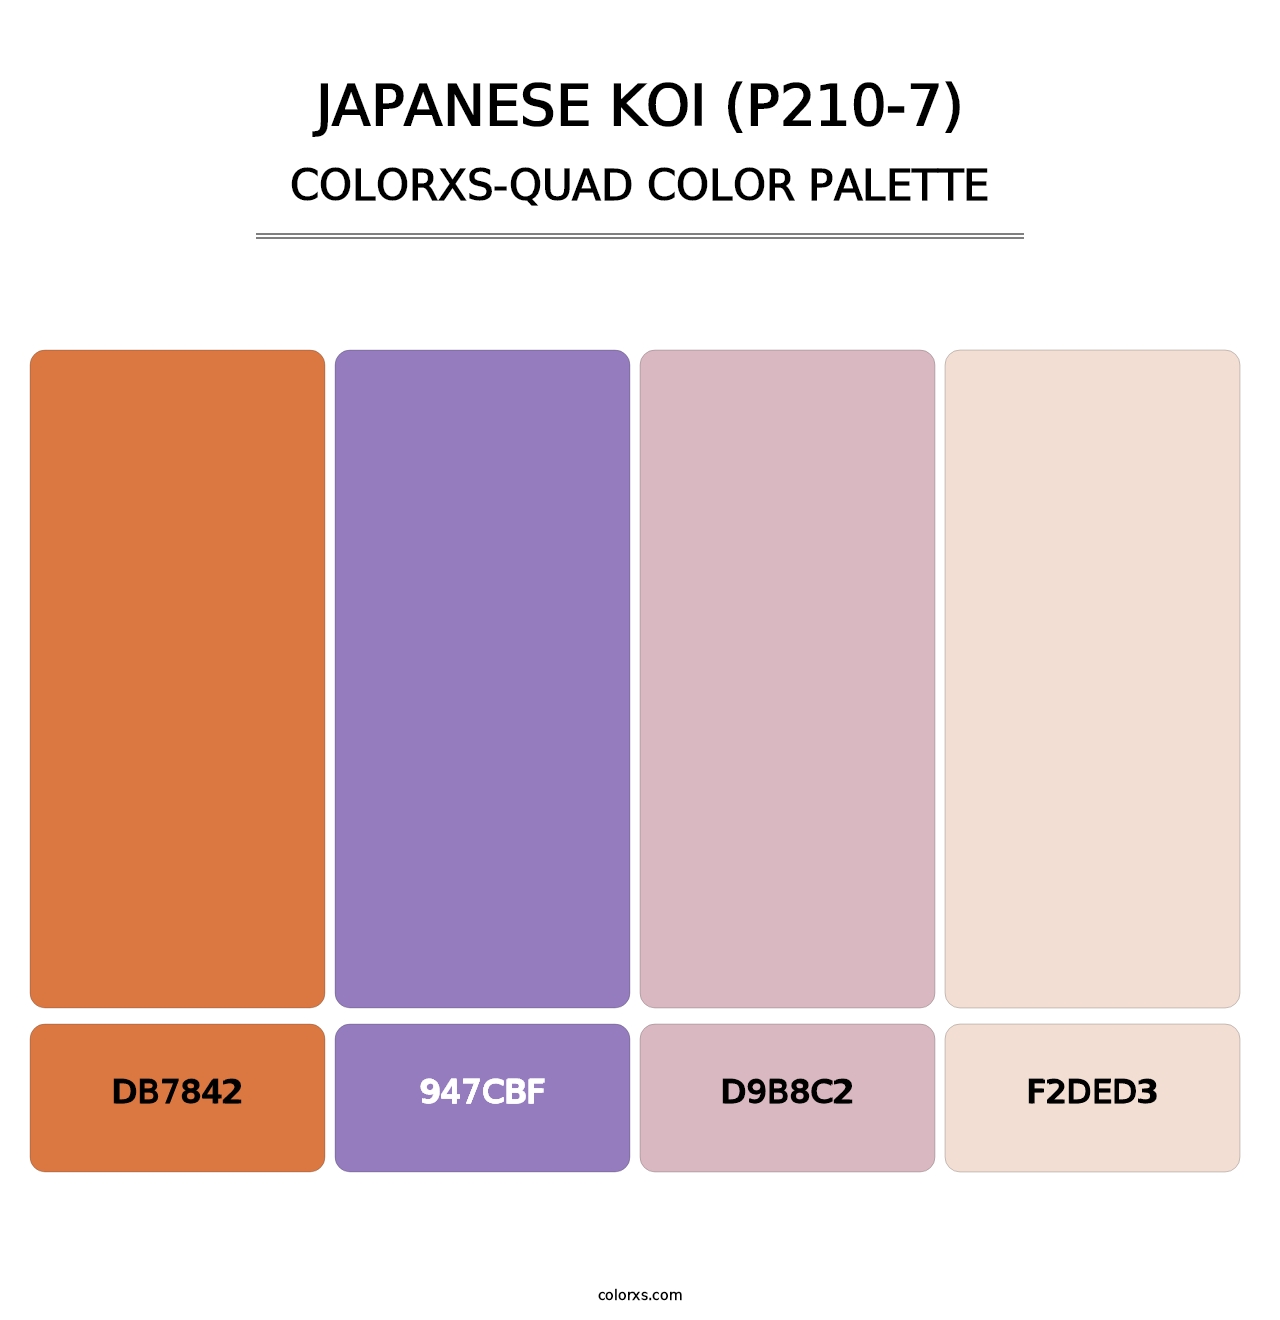 Japanese Koi (P210-7) - Colorxs Quad Palette